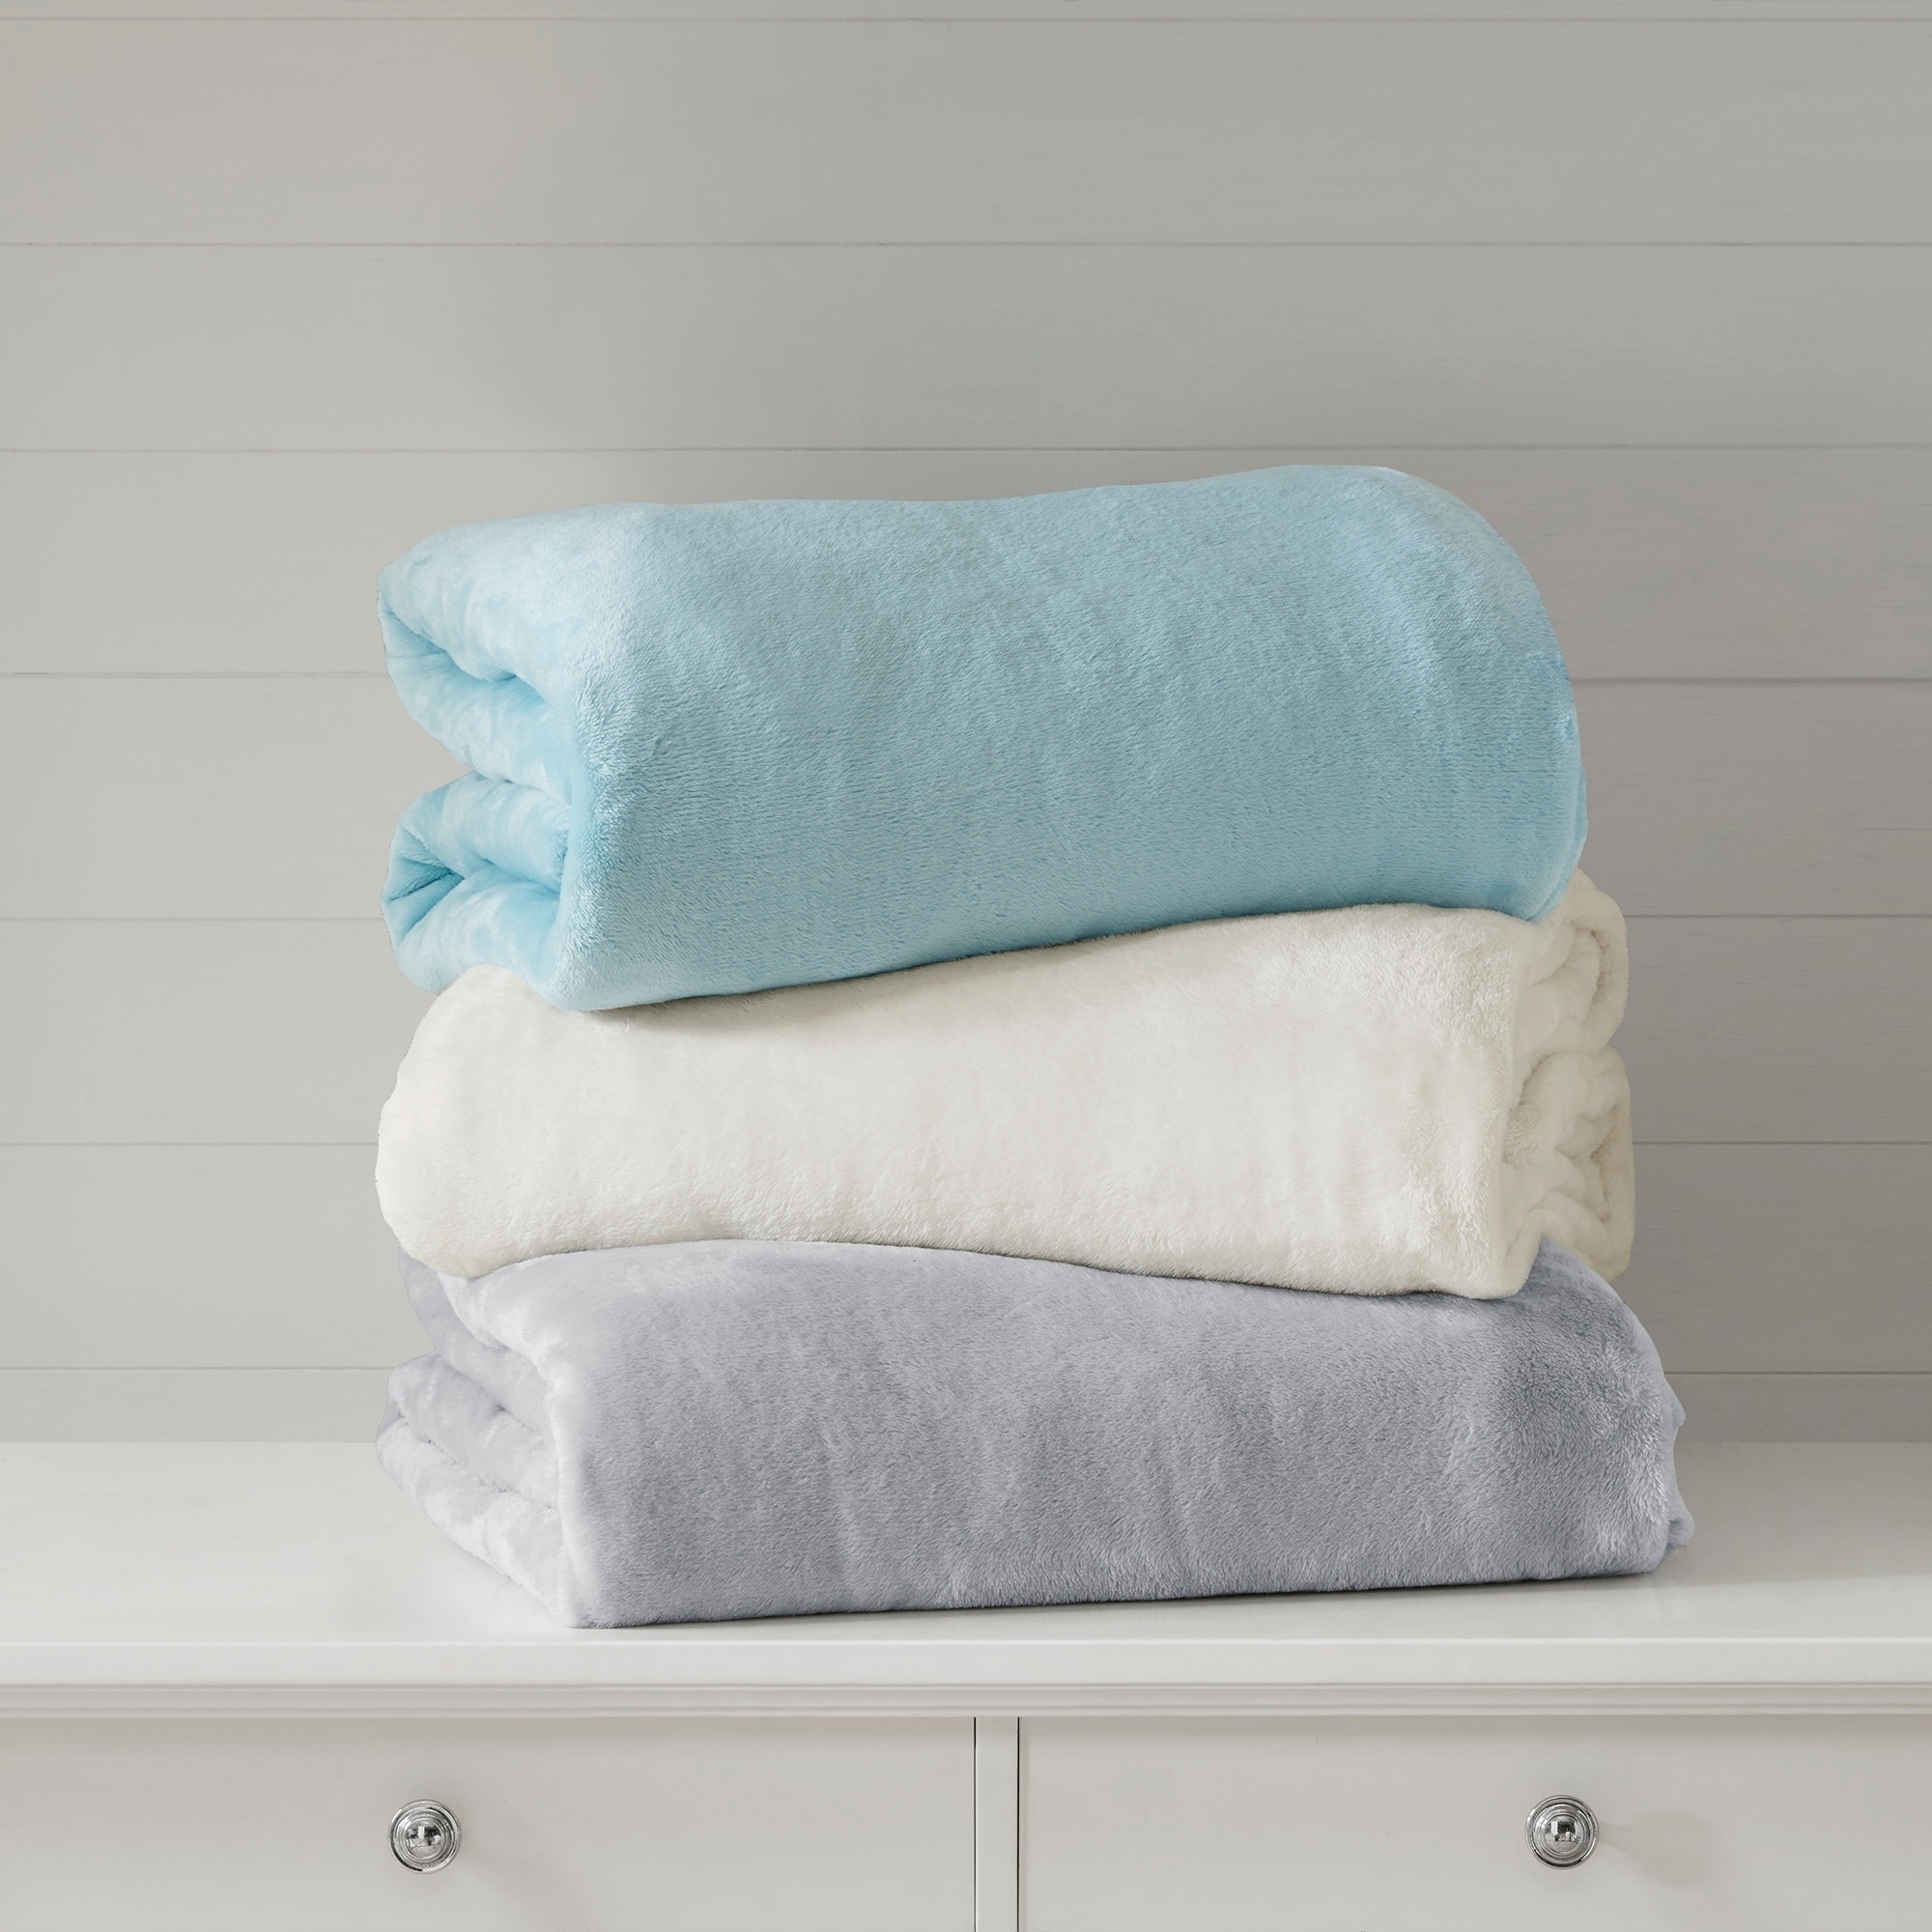 Sleep Philosophy Premium Soft Plush Weighted Blanket with Zipper Closure -  Bed Bath & Beyond - 22254479